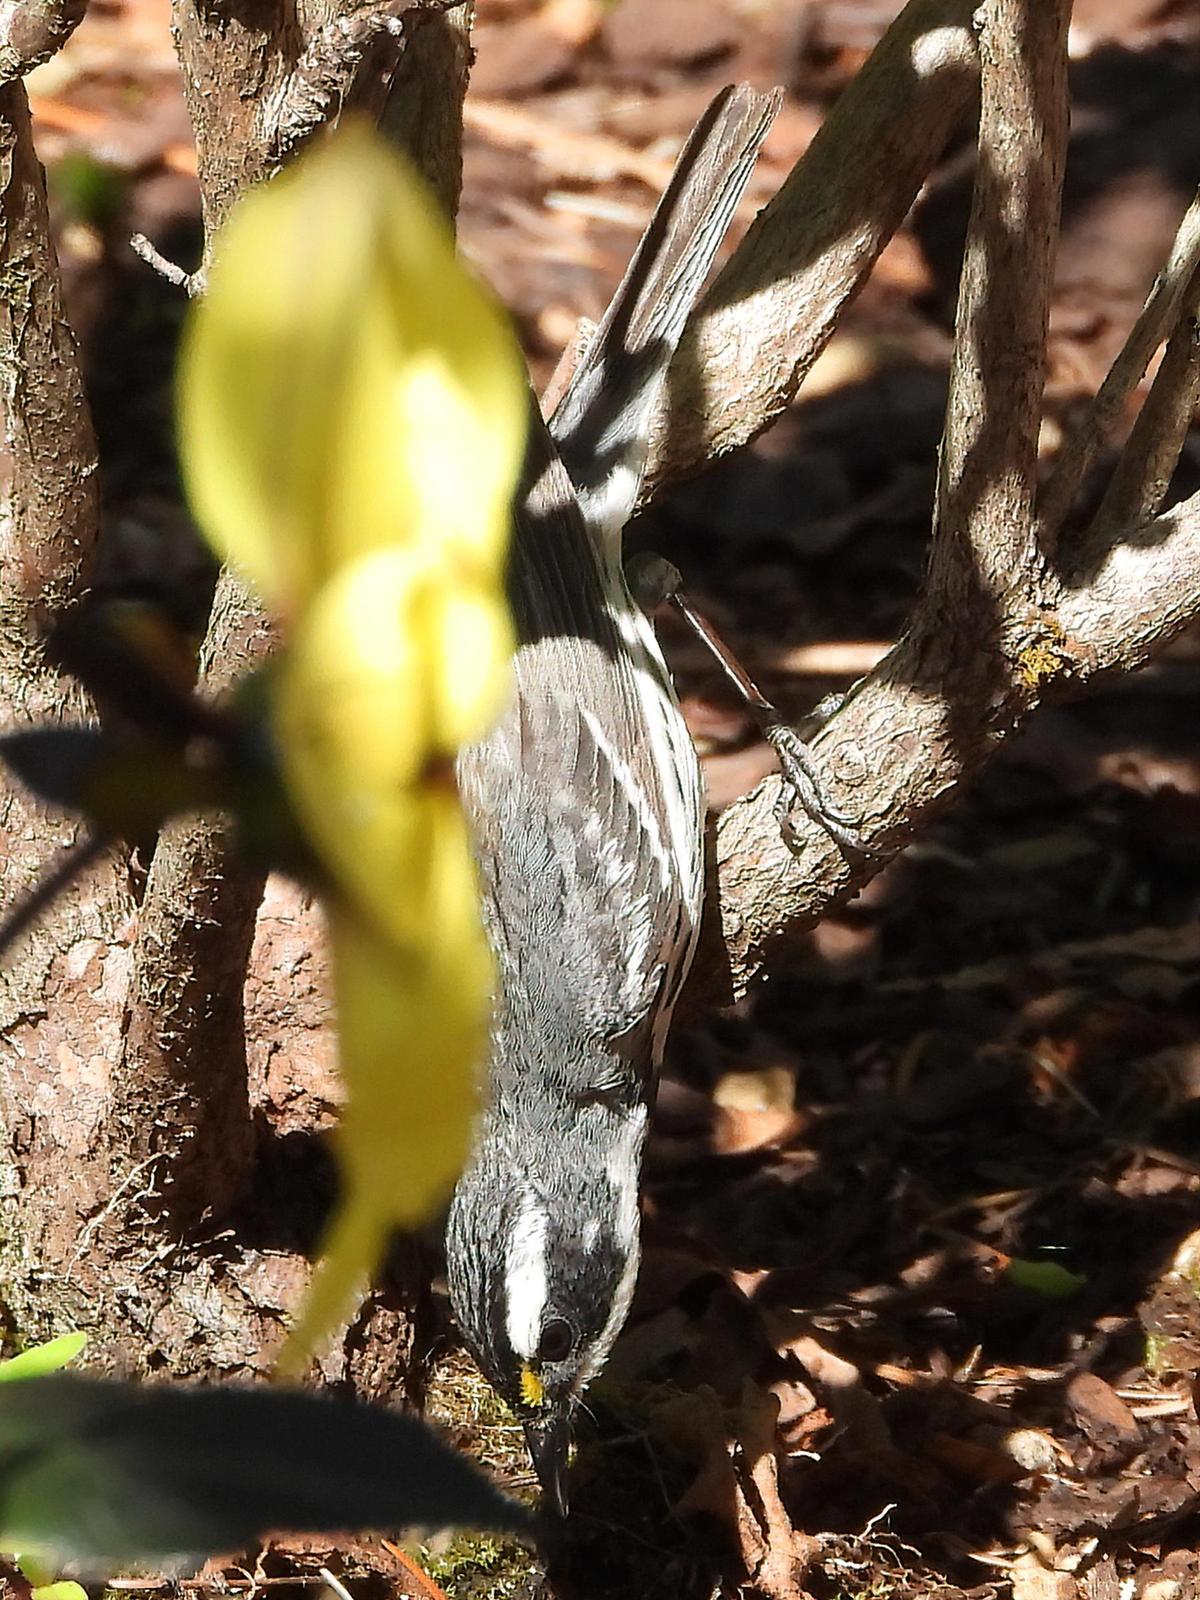 Black-throated Gray Warbler Photo by Dan Tallman